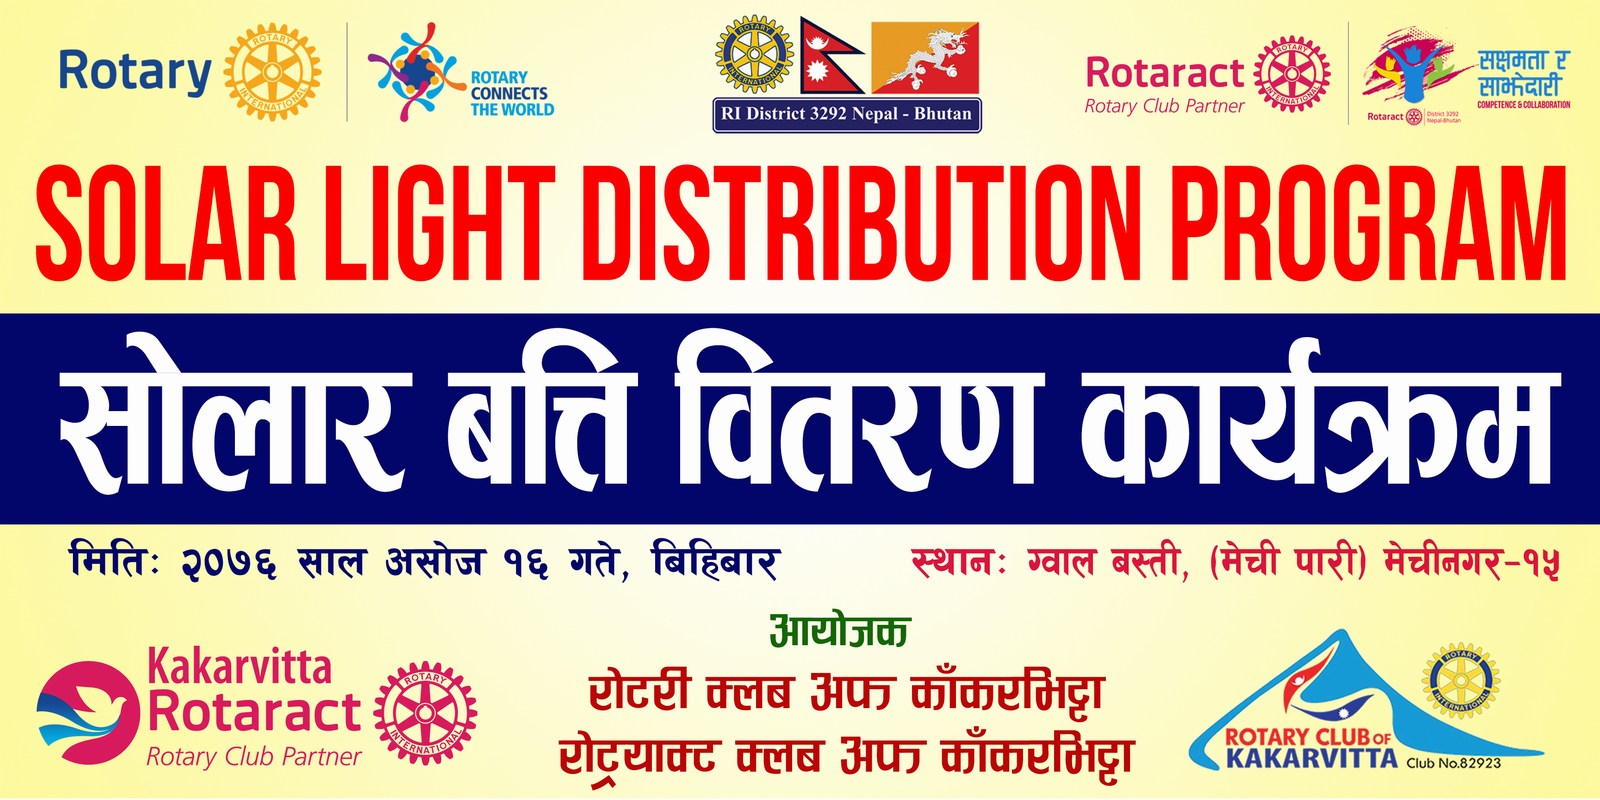 Solar-Light-Distribution-Program-Rotary-Club-of-Kakarvitta-1